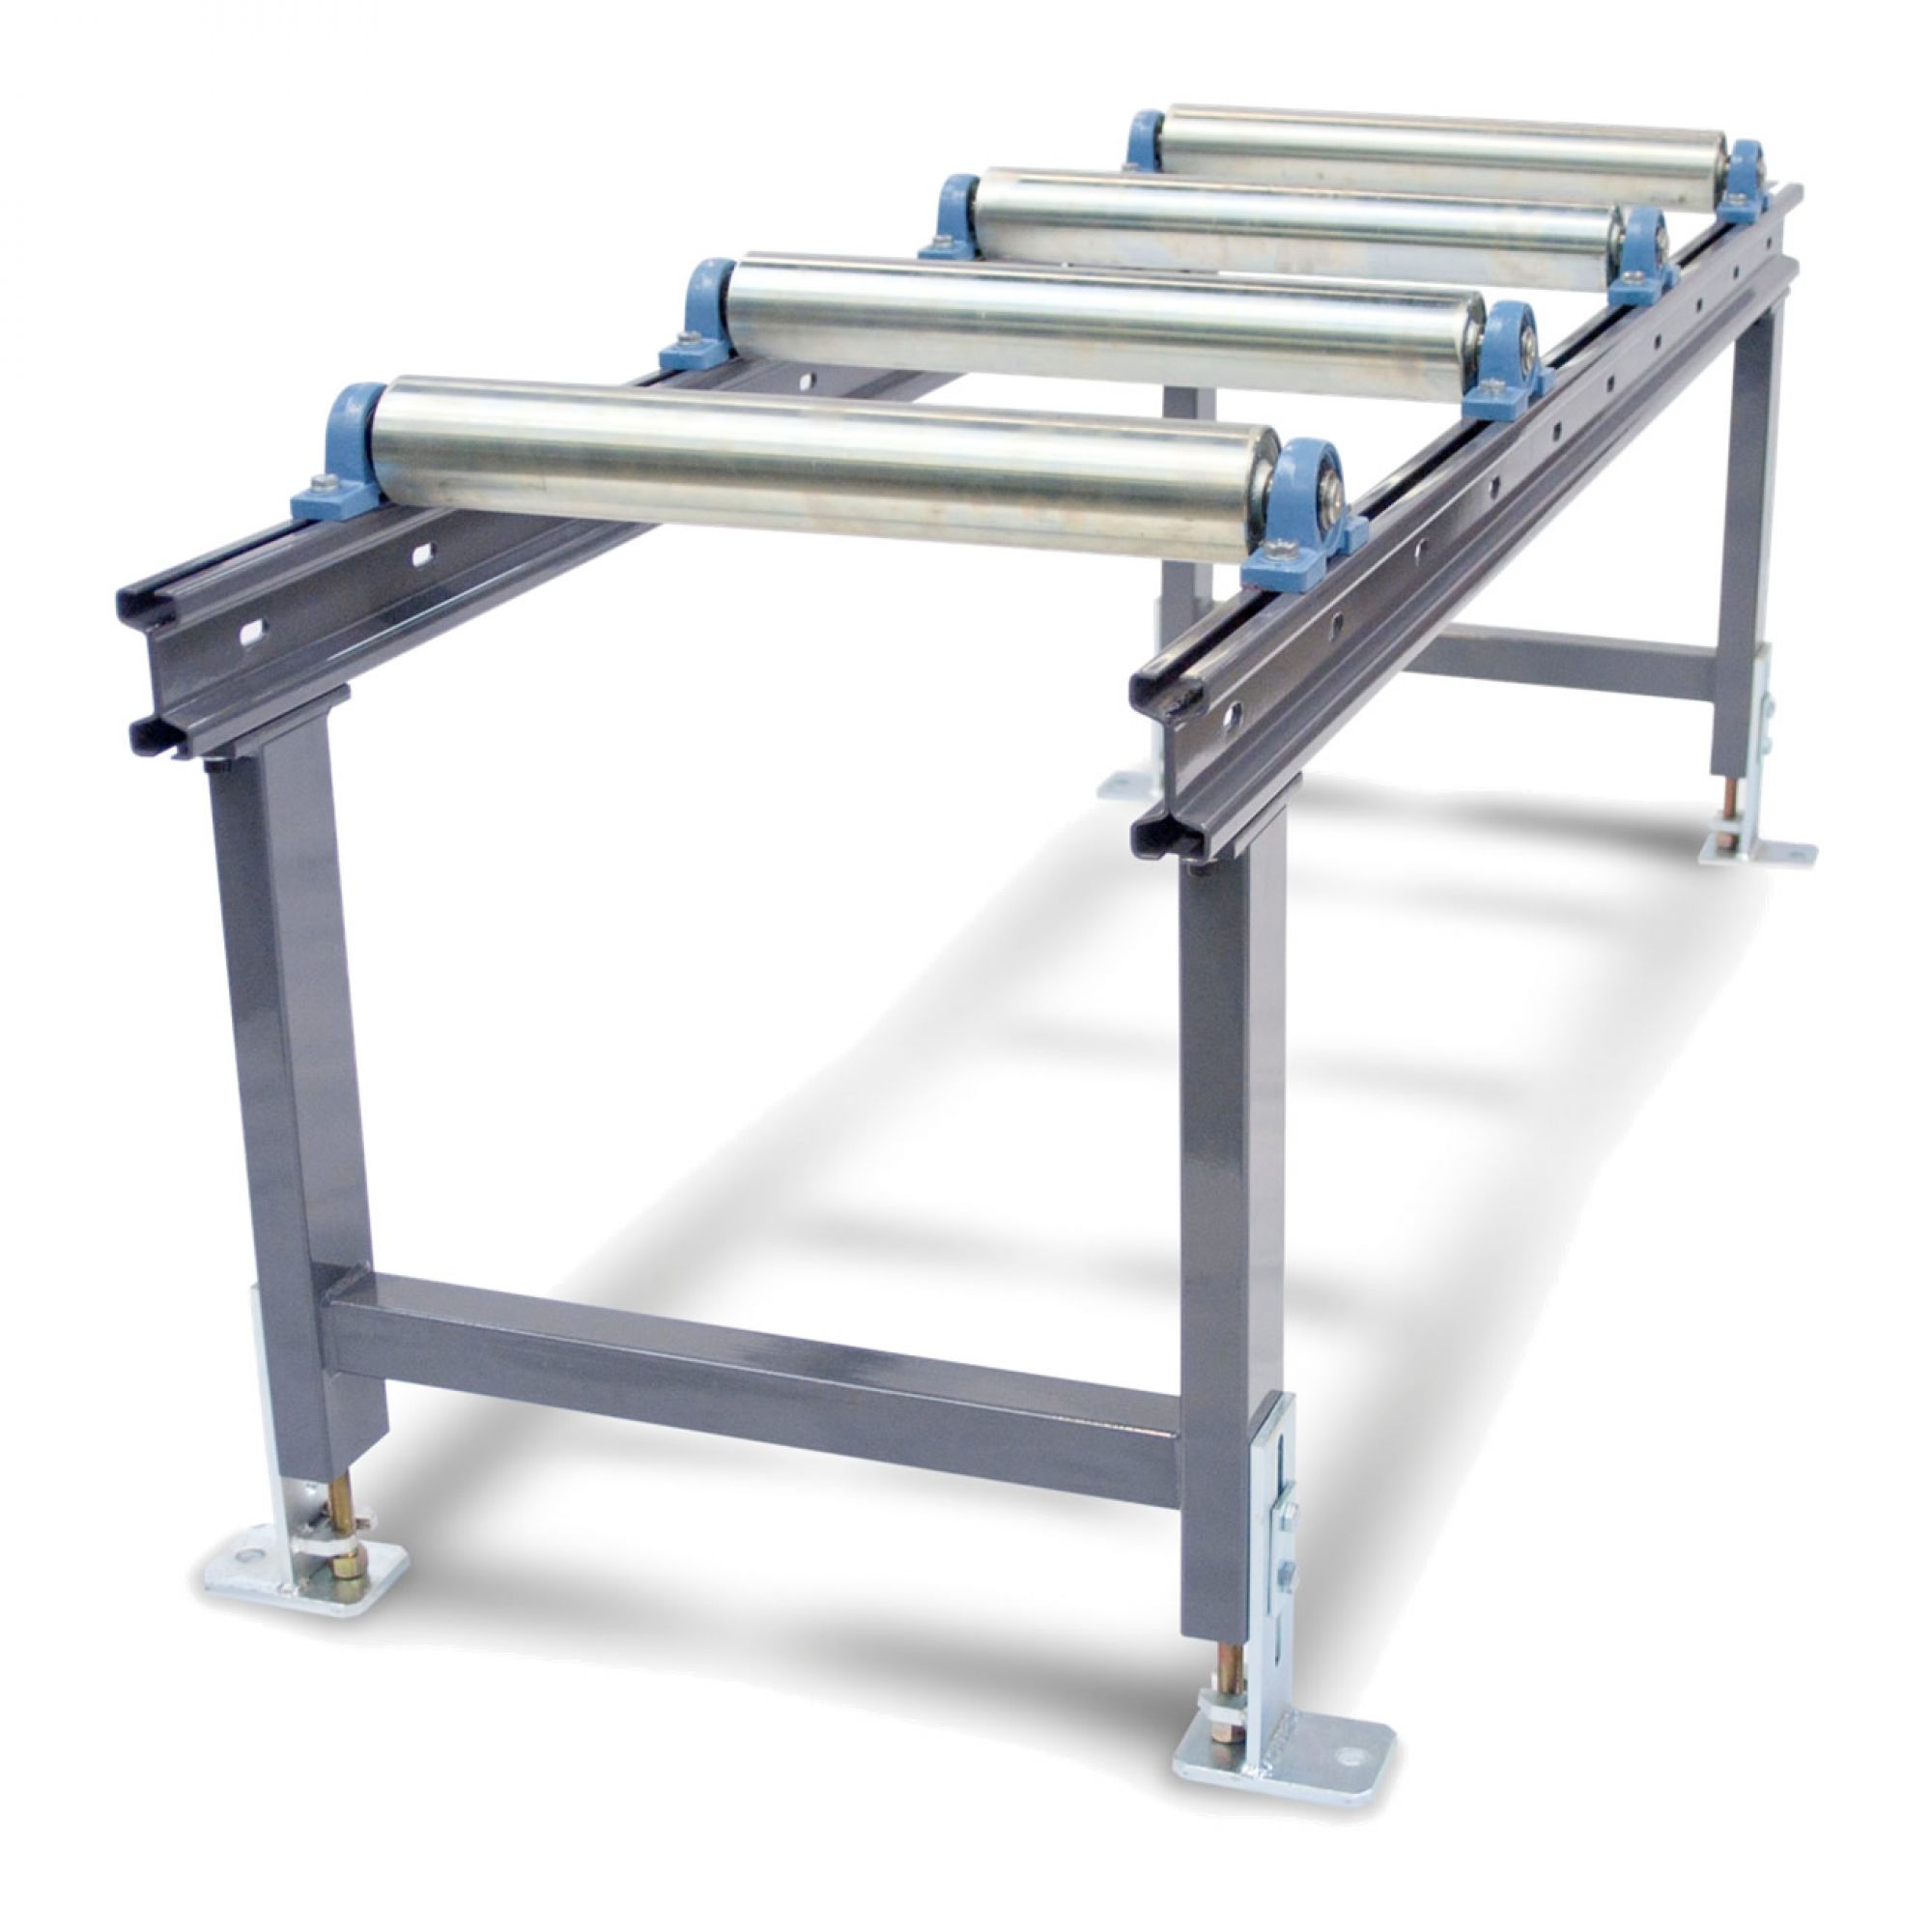 SDX550-2mtr Roller Conveyors